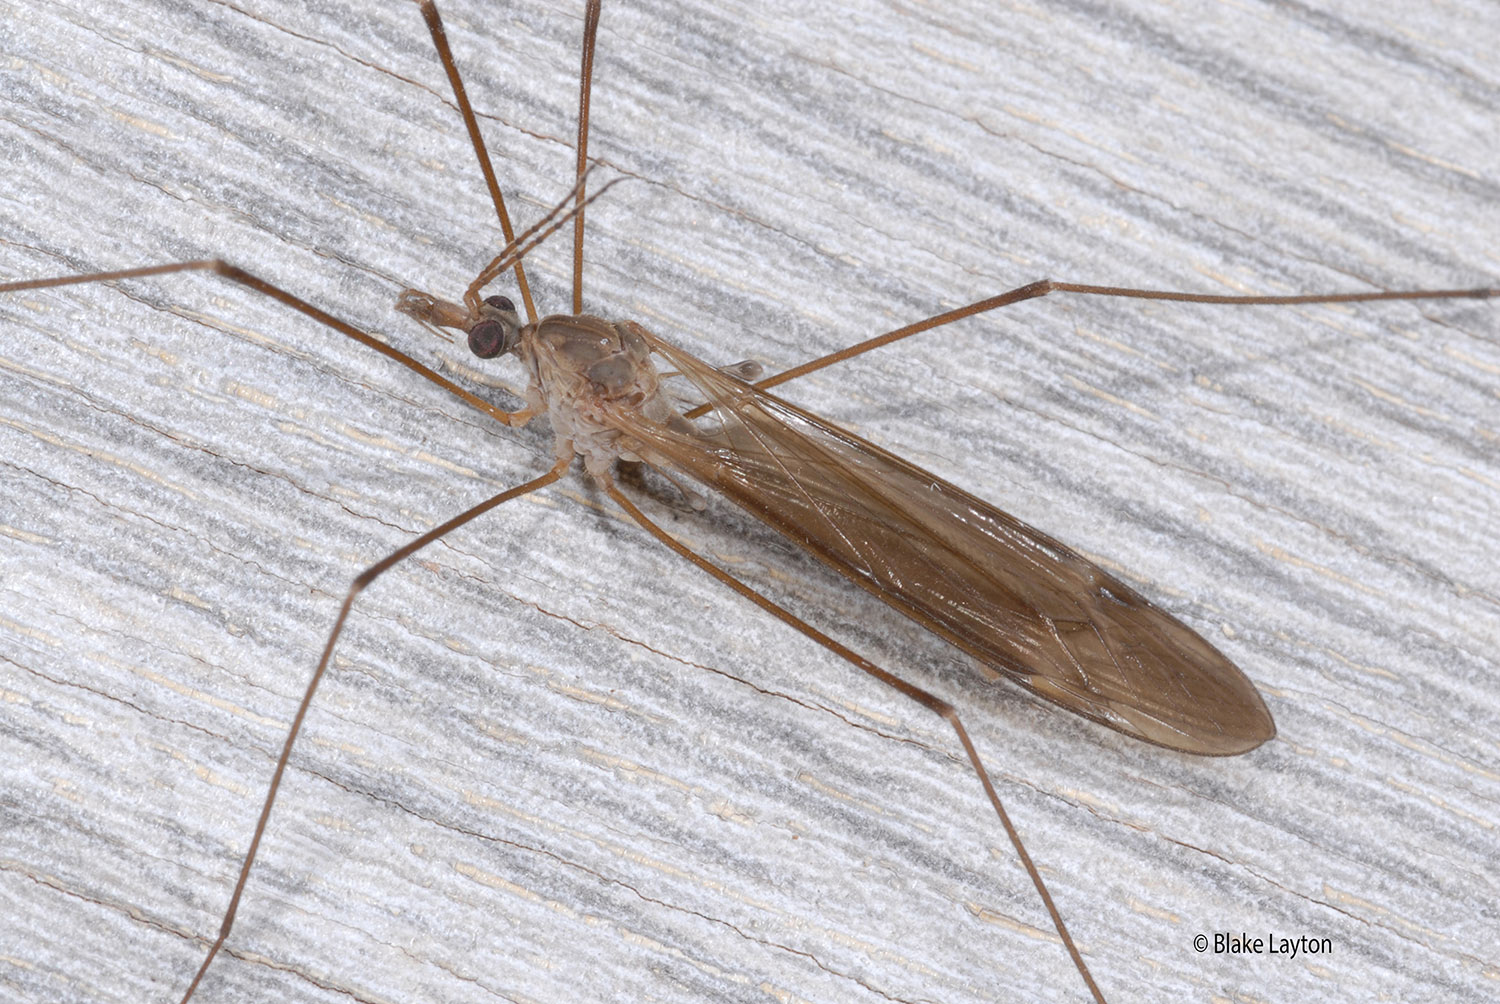 A large, long-legged fly.